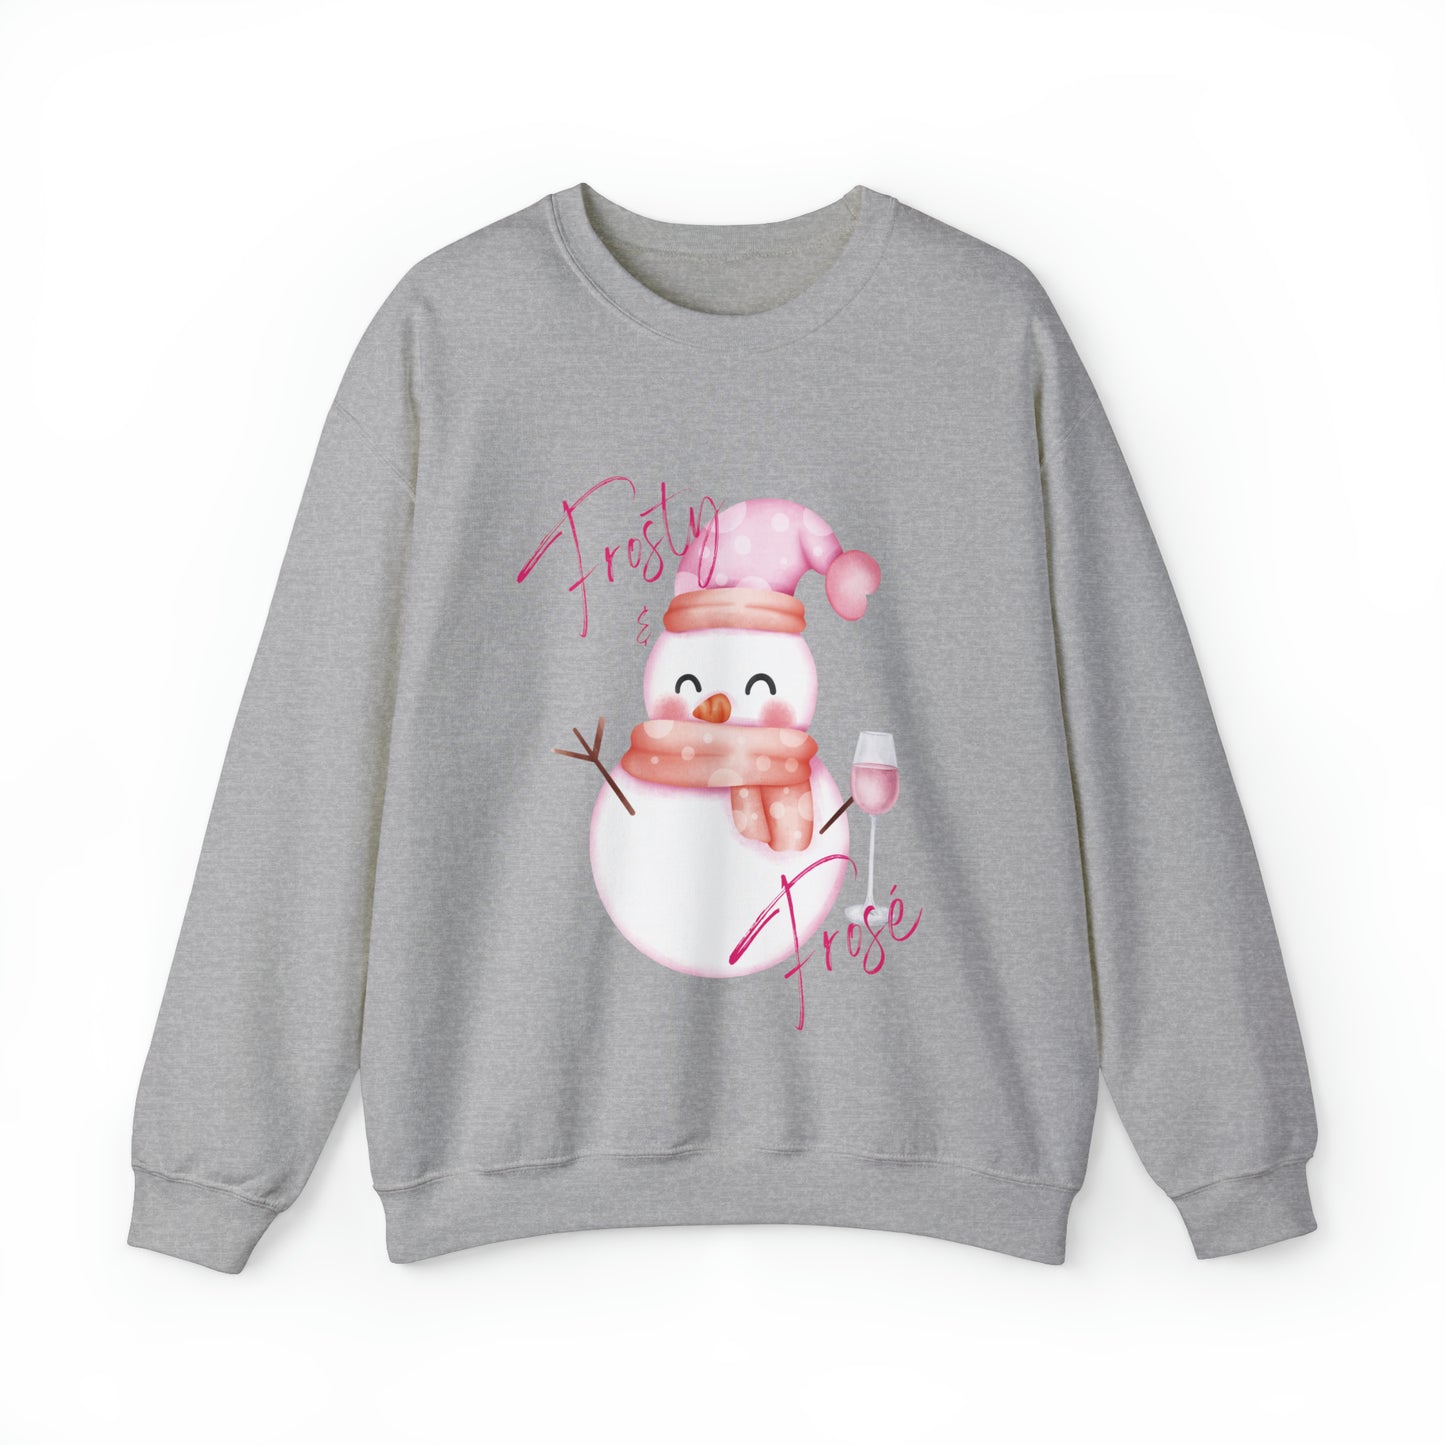 Frosty & Frosé Crewneck Sweatshirt